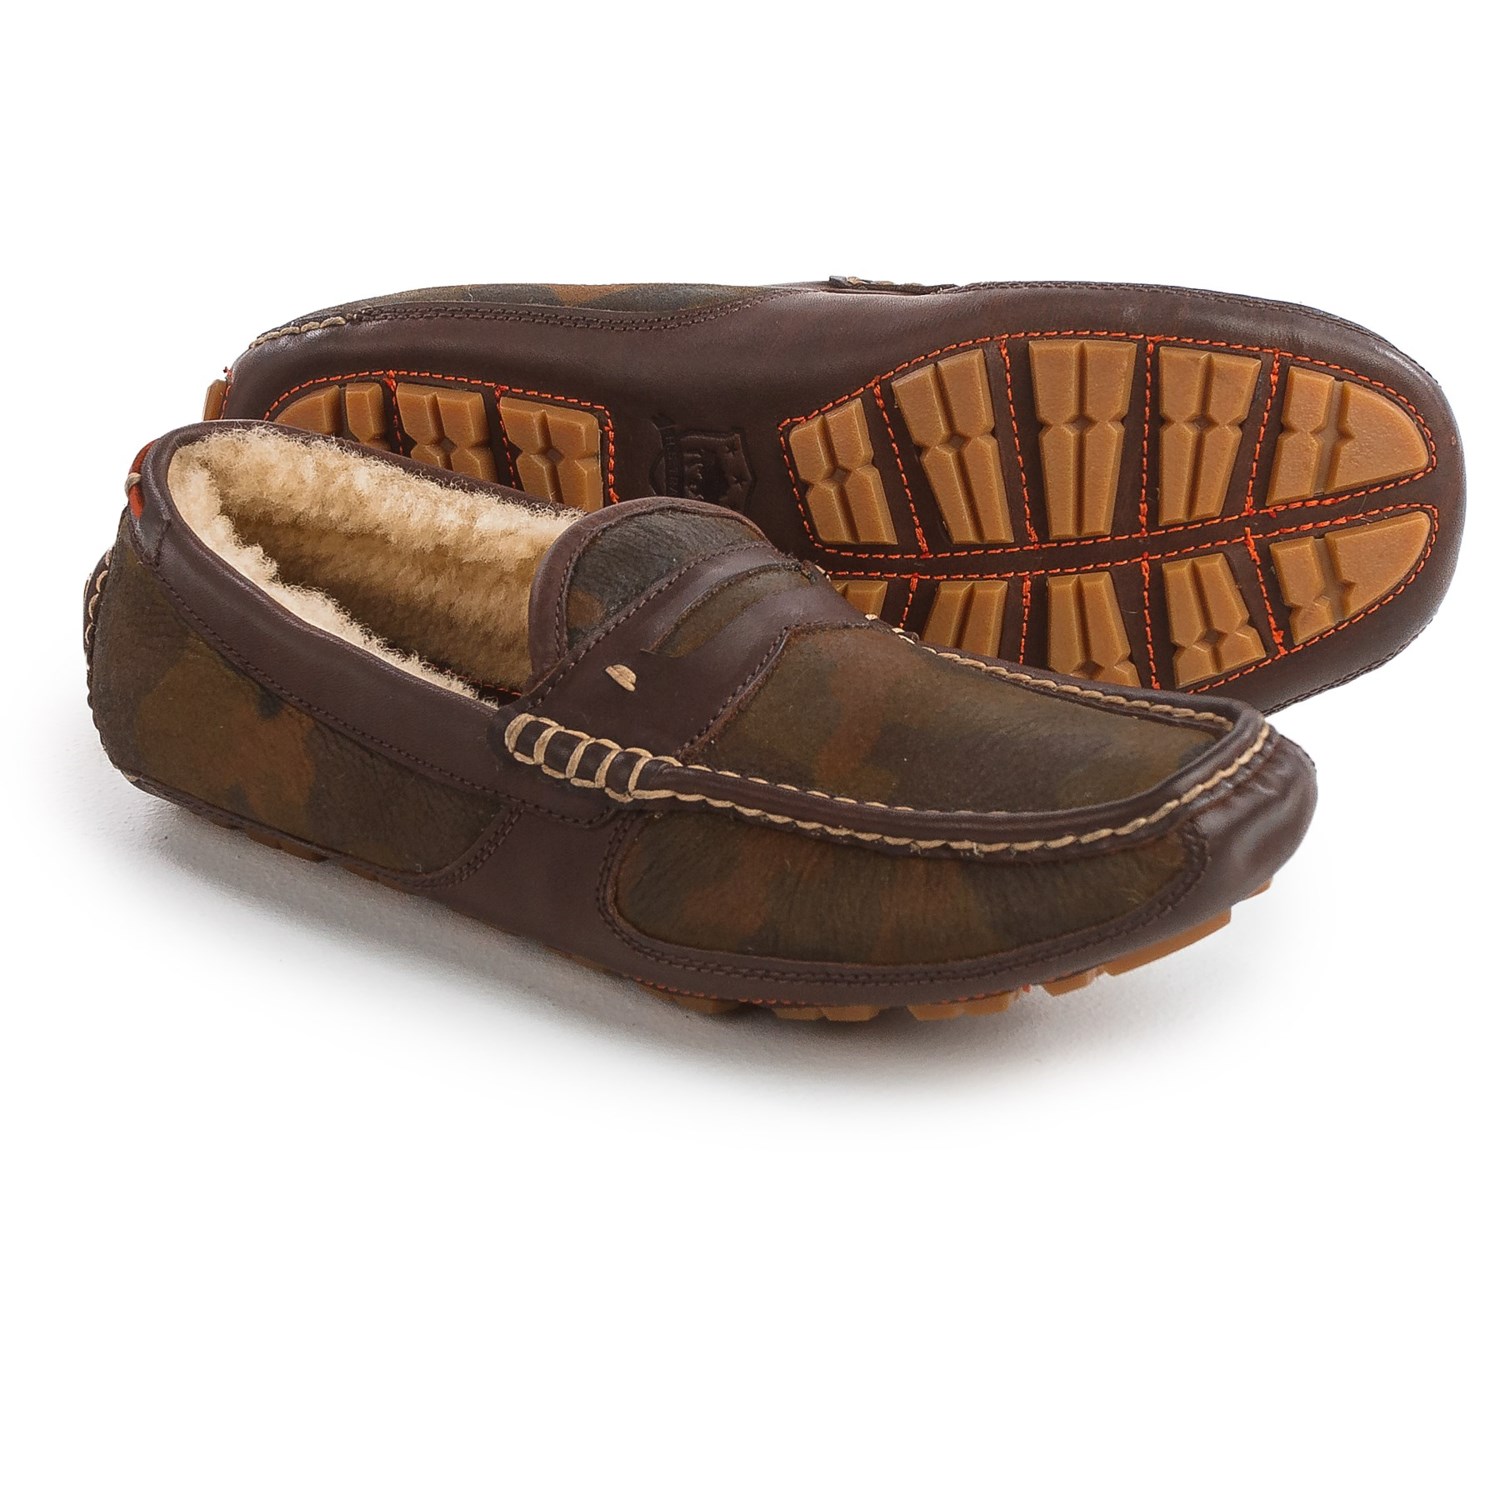 Trask Derek Driving Shoes – Leather, Shearling Lined (For Men)